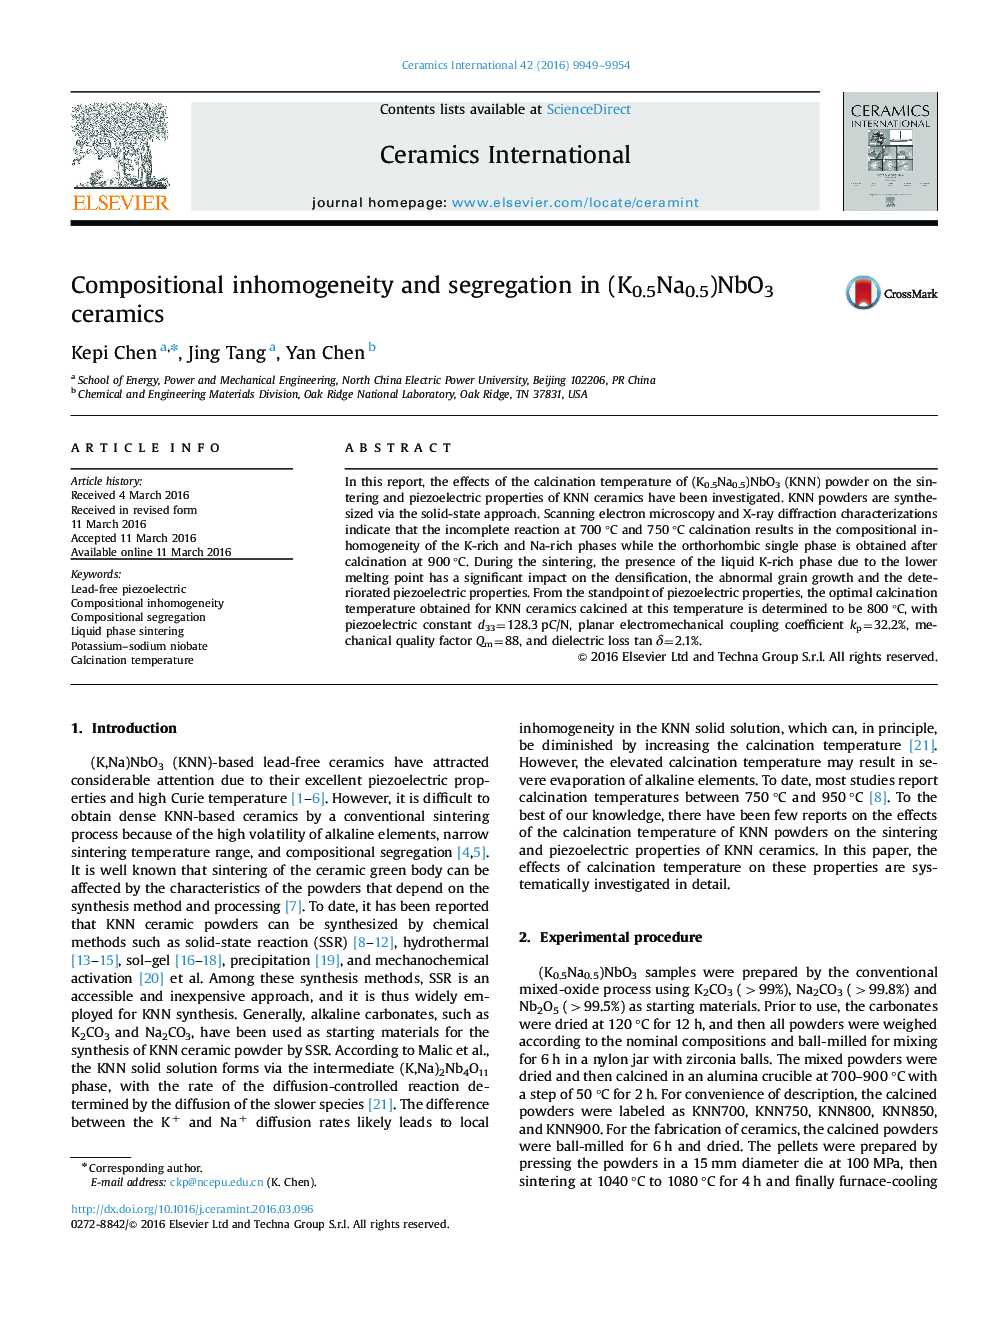 Compositional inhomogeneity and segregation in (K0.5Na0.5)NbO3 ceramics